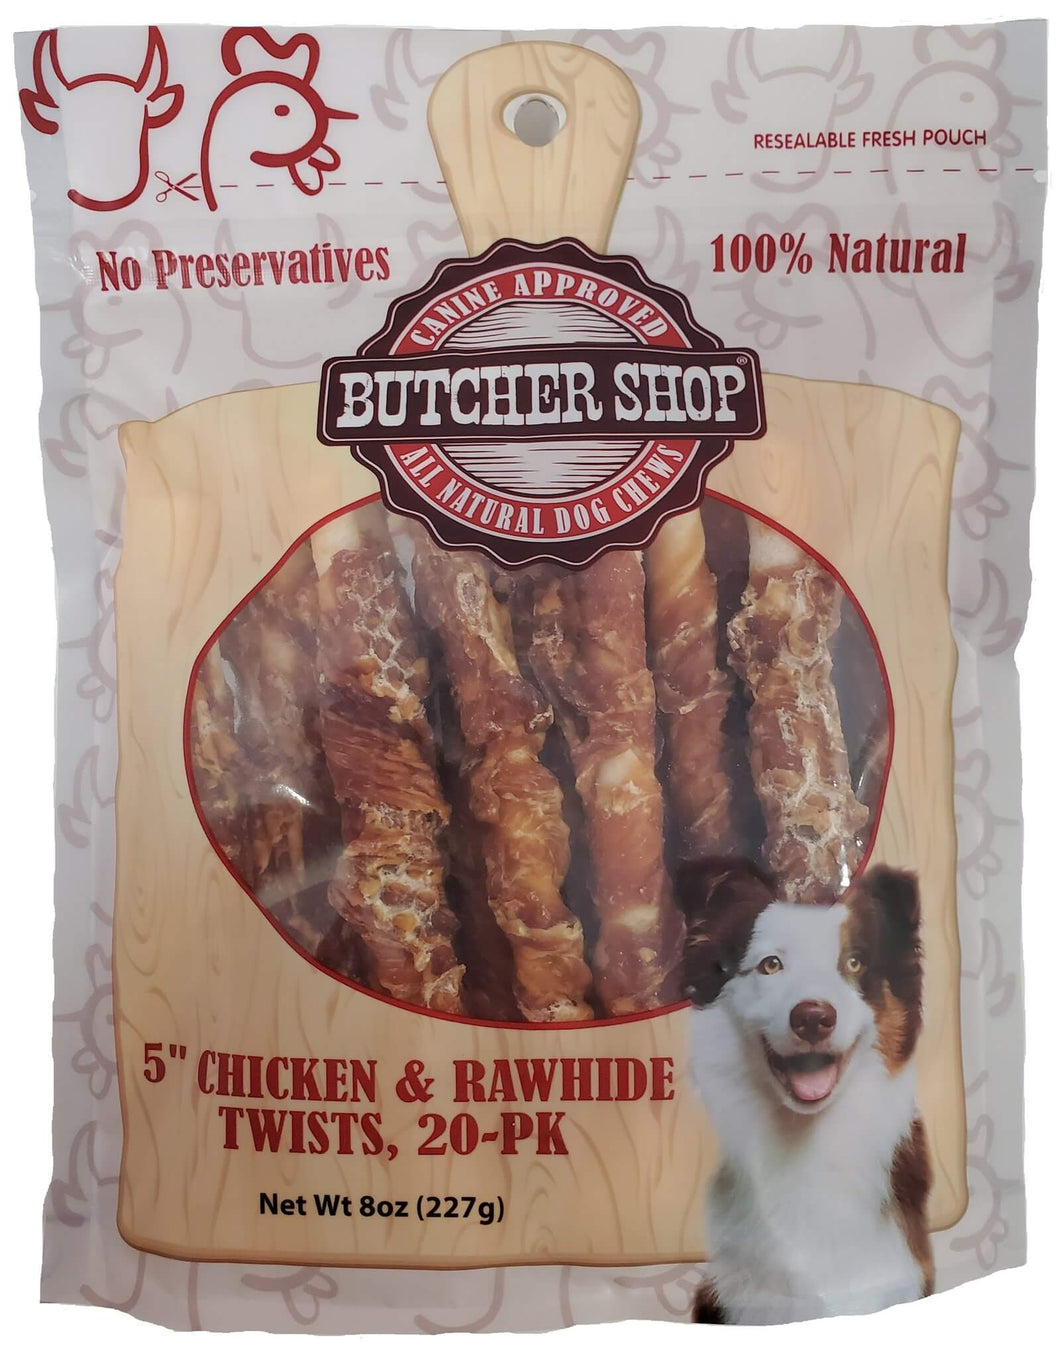 Butcher Shop 5” Chicken & Rawhide Twists, 20-Pk